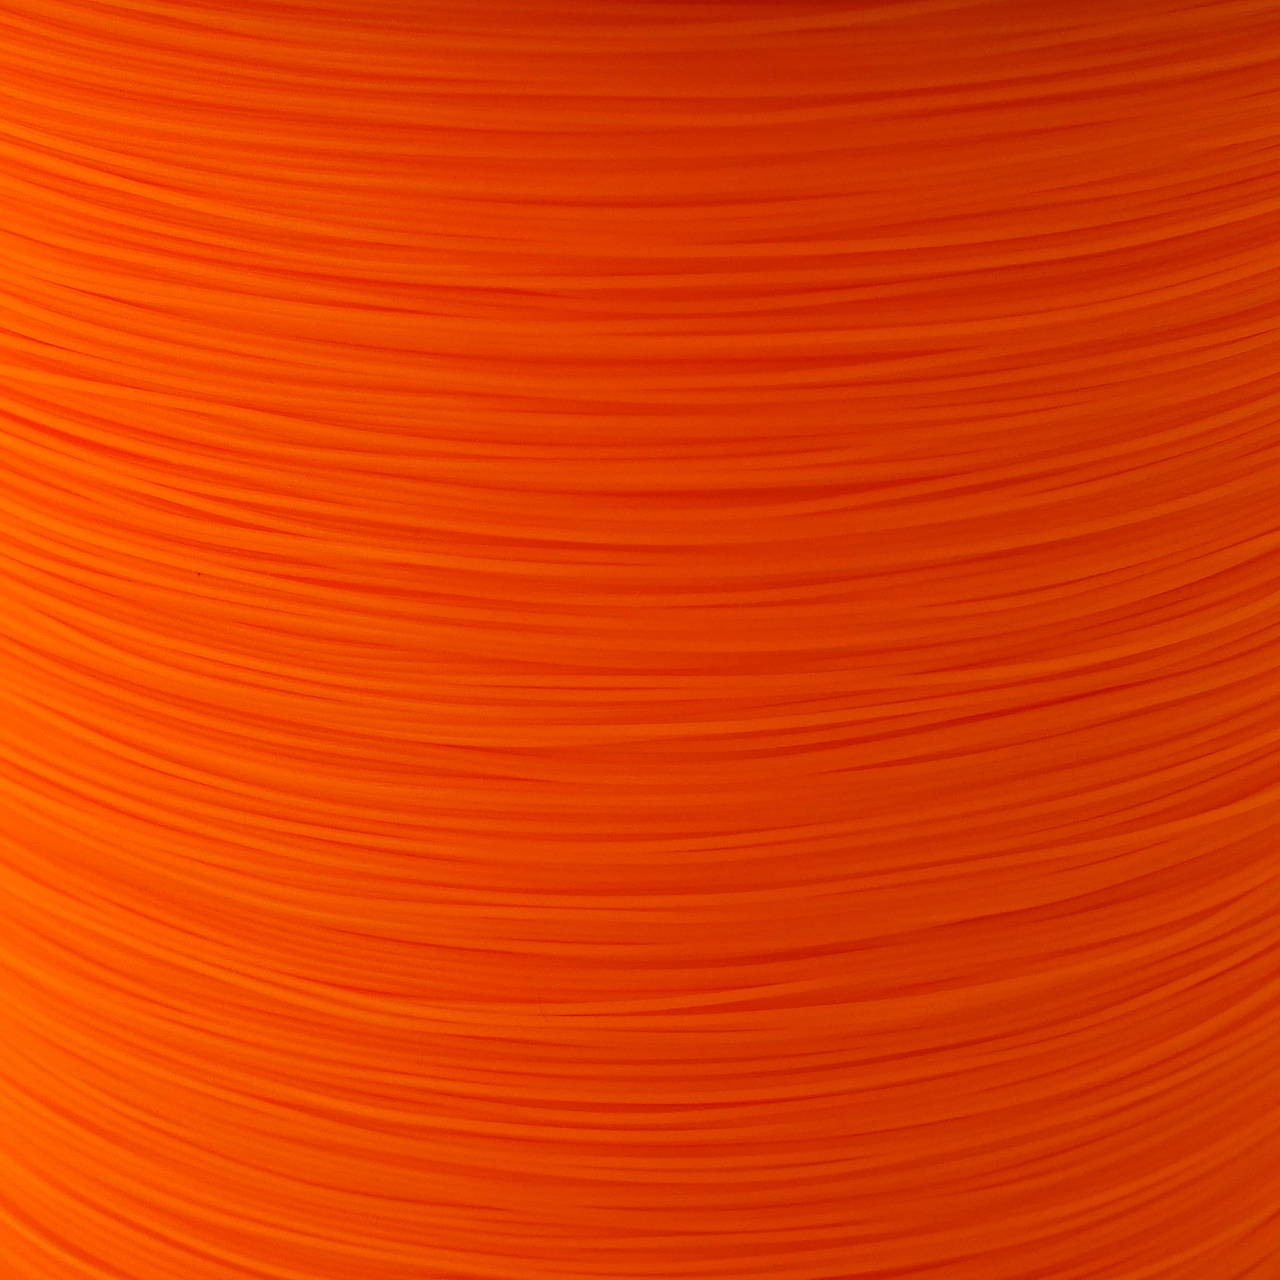 Hunterboy Opaque Orange Nylon Fishing Line 1000m 40lb Super High Visibility  Mono - Wholesale Fishing Supplies